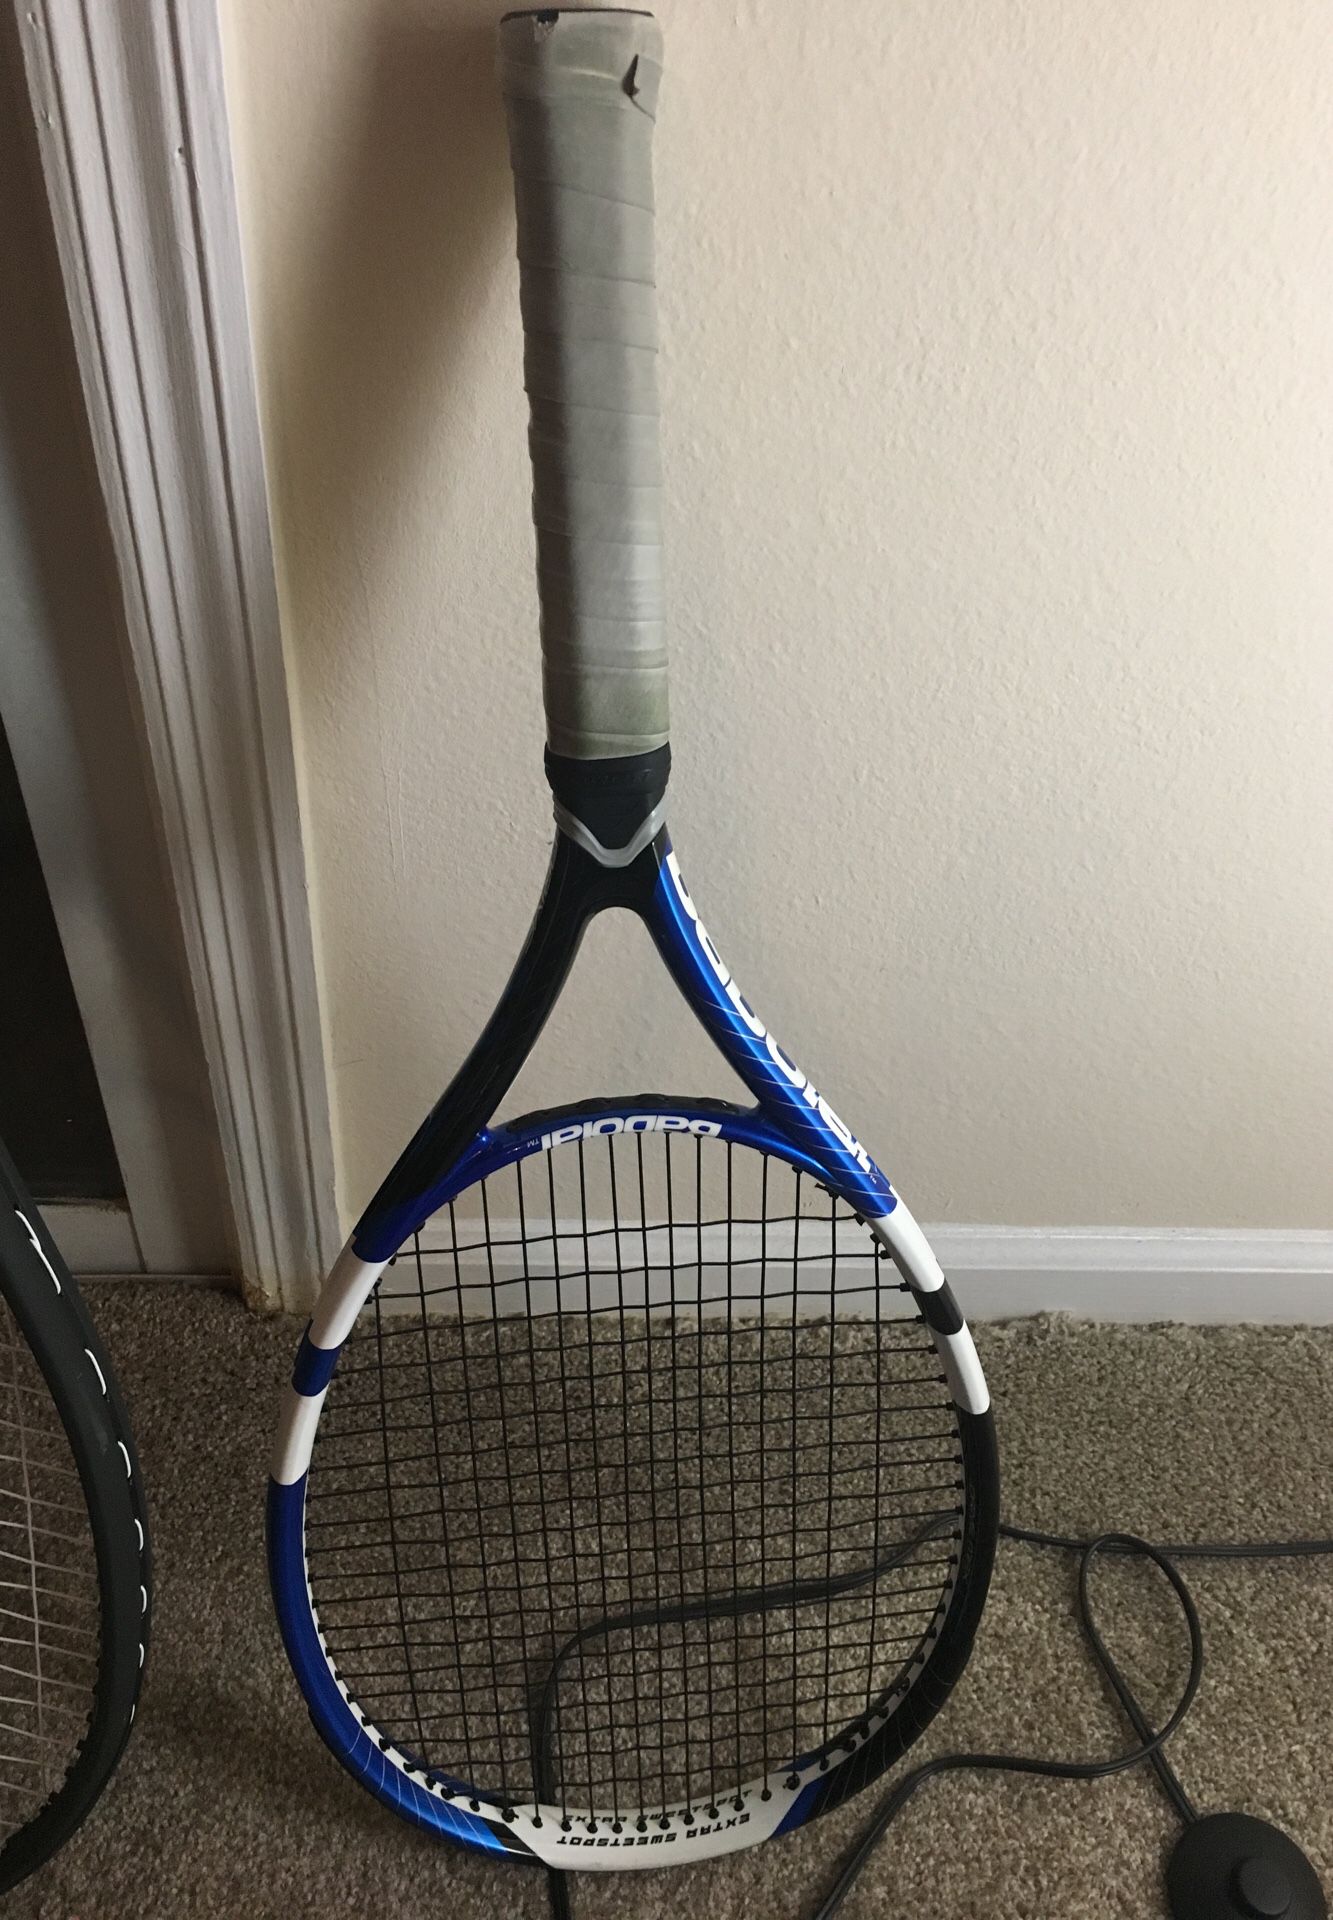 Tennis rackets- Babolot and TIS6